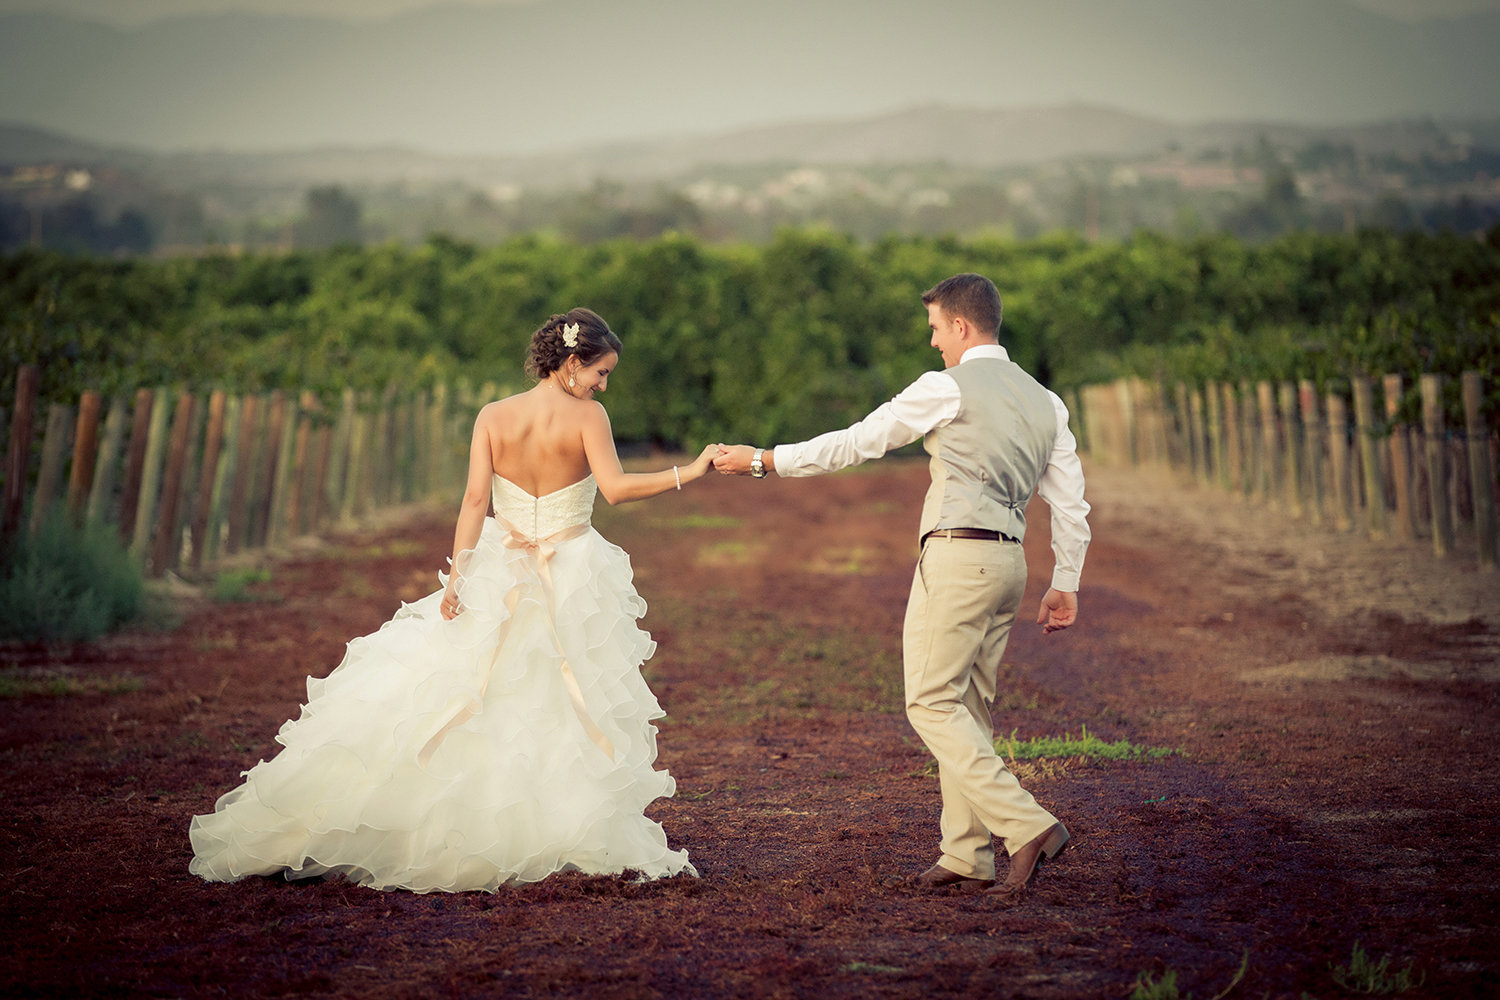 Temecula Winery wedding photos beautiful couple in vineyard